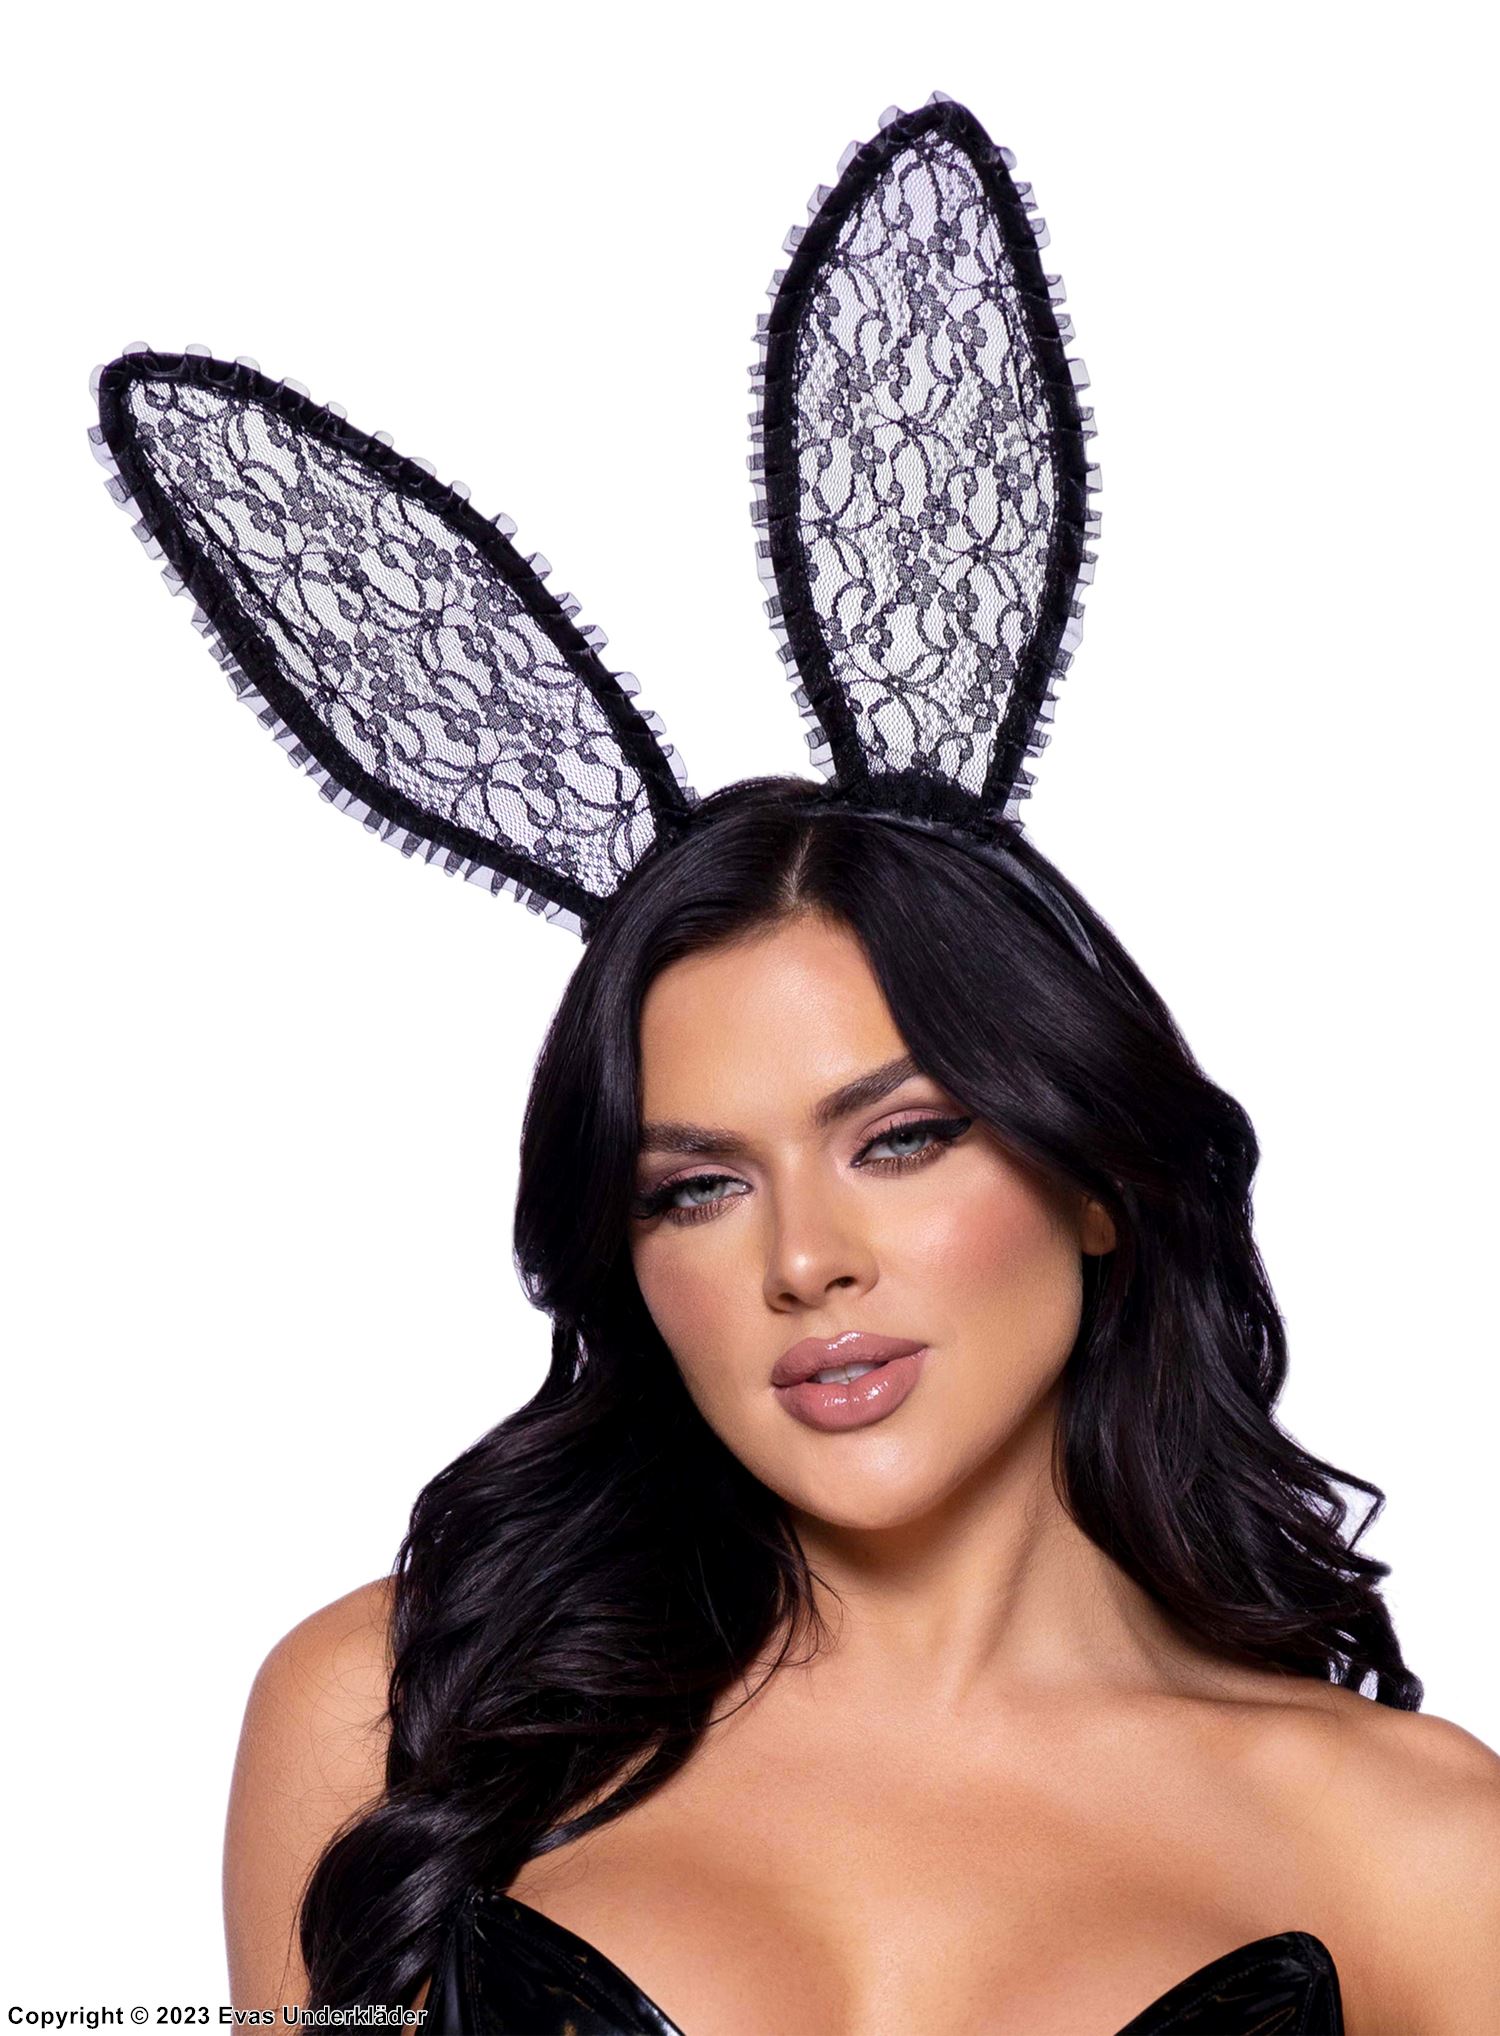 Playboy bunny, costume headgear, floral lace, big ears